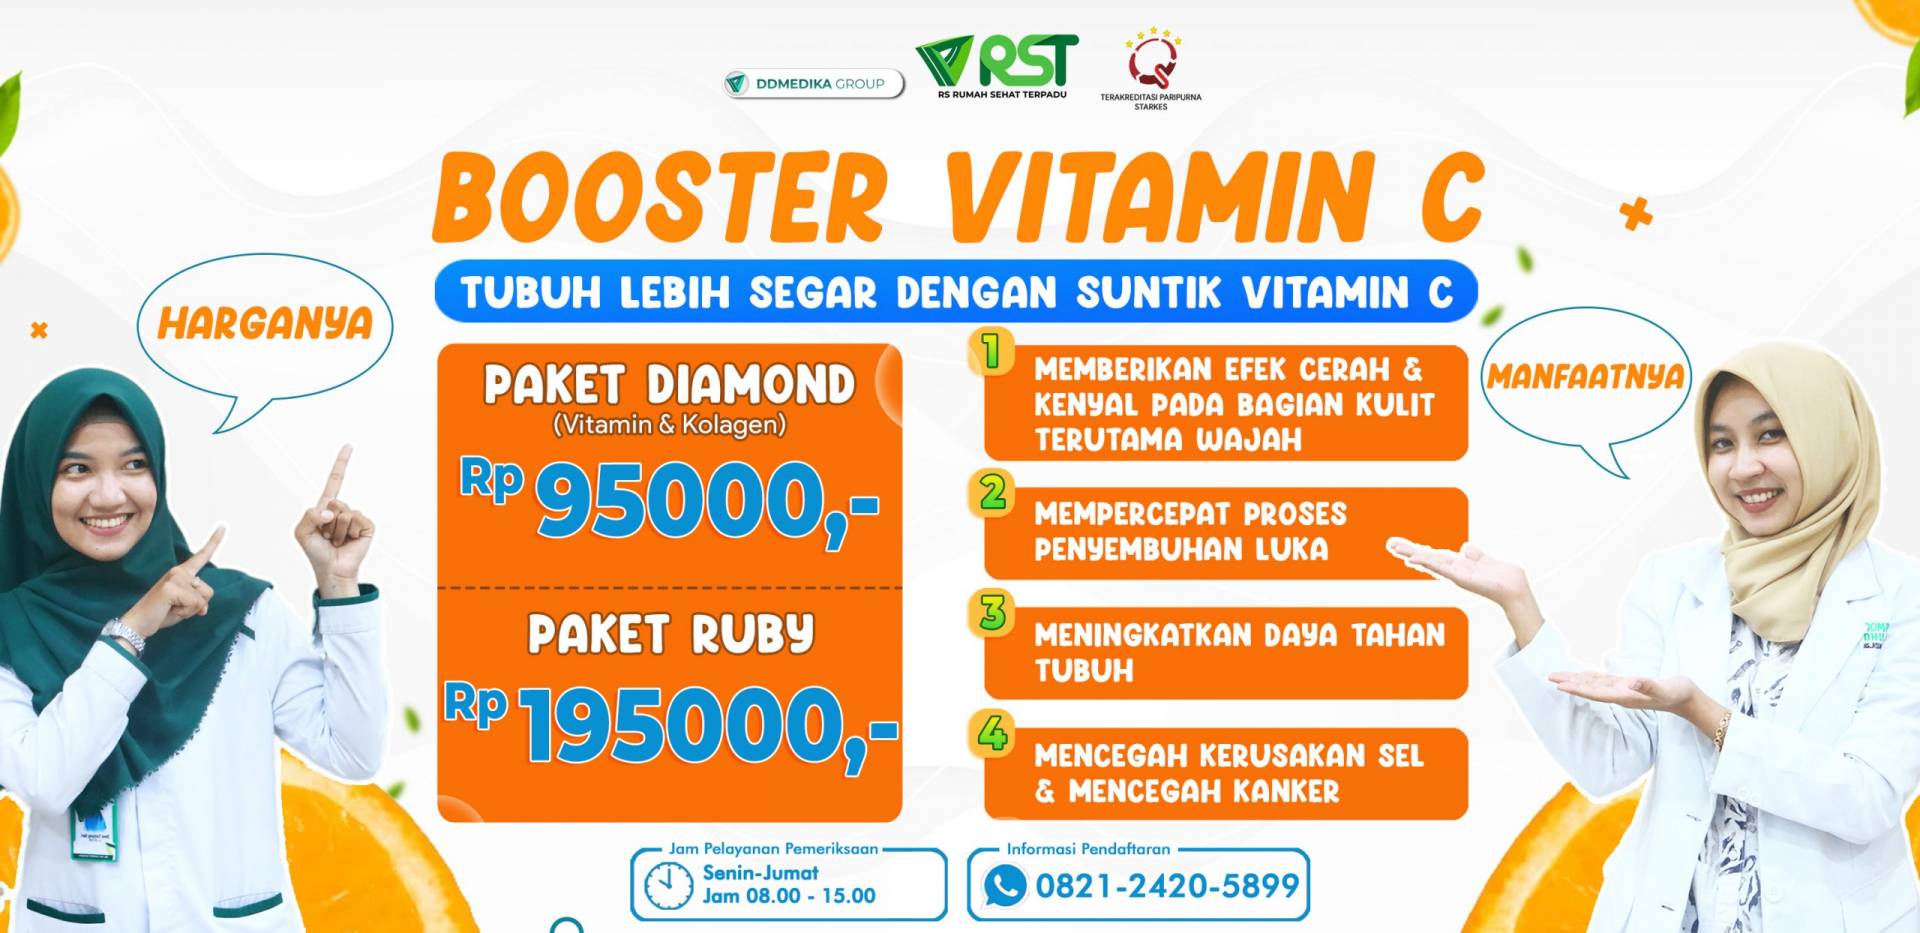 RST Booster Vitamin C